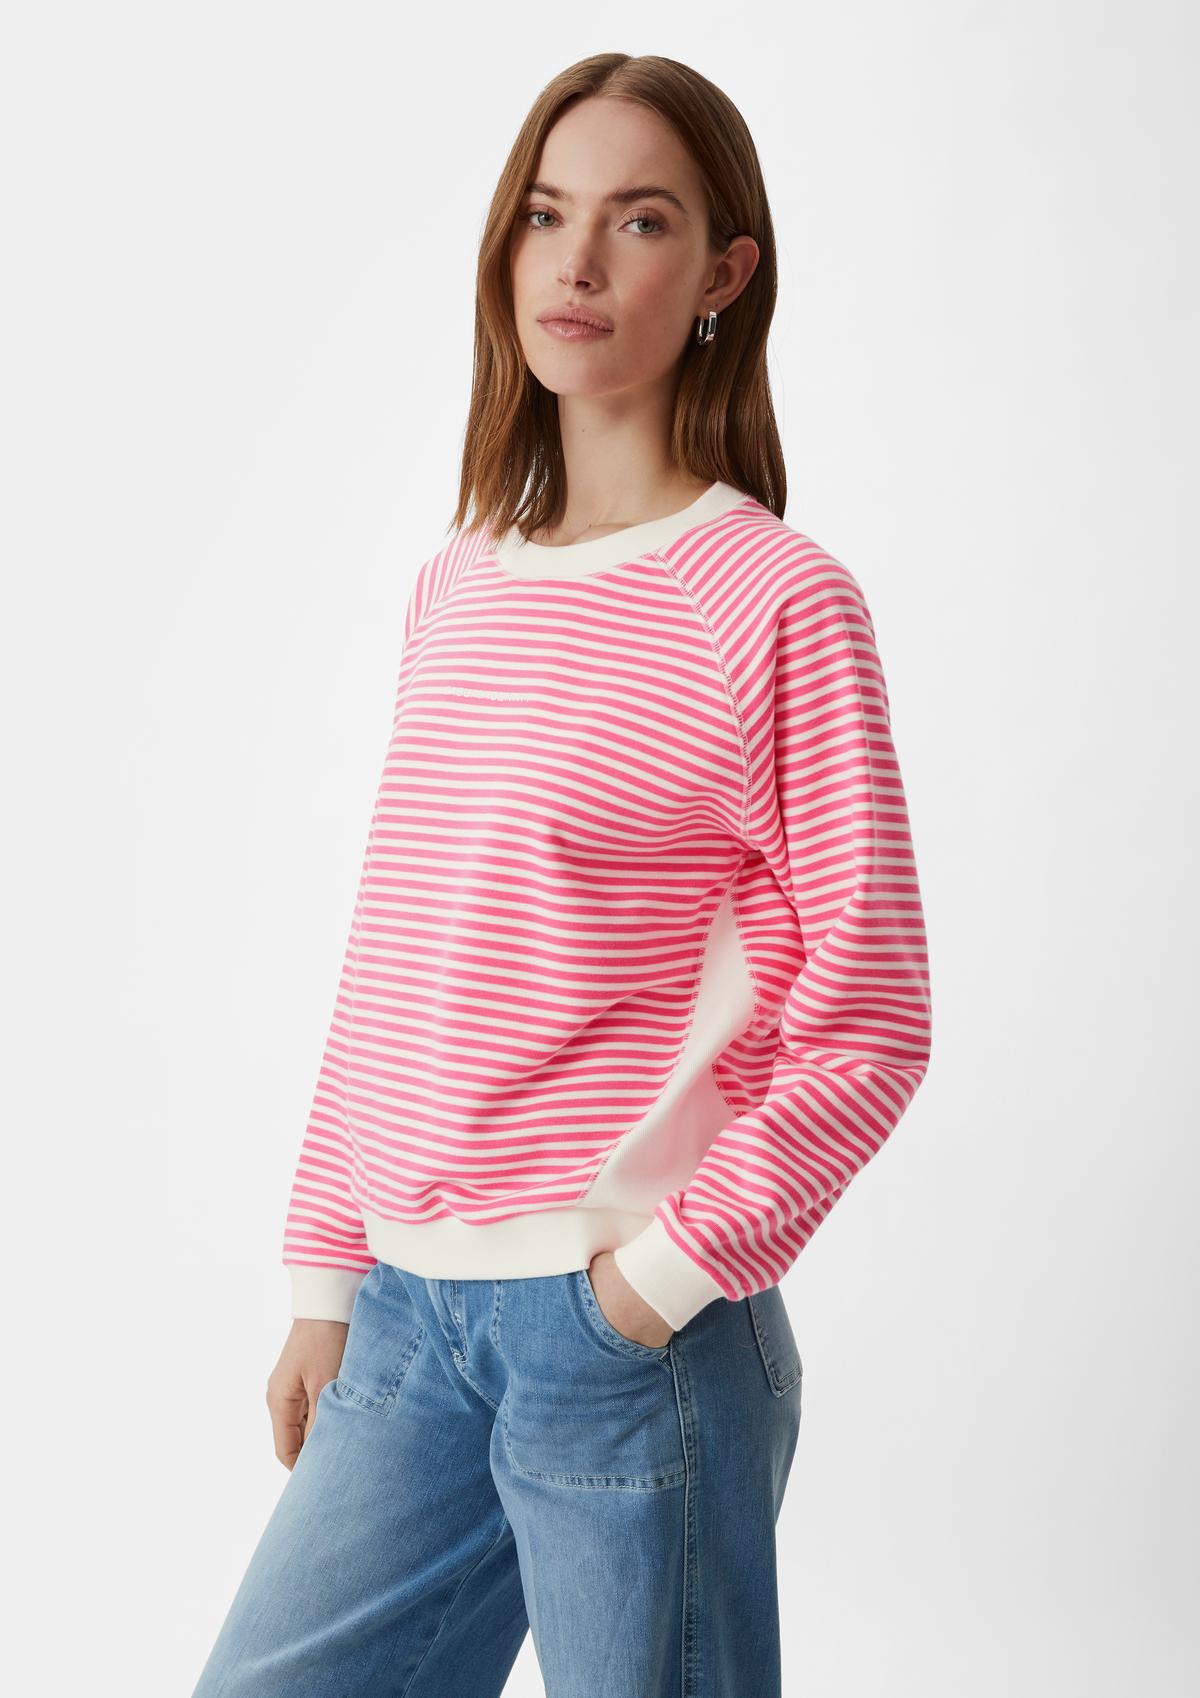 Sweatshirt with a striped pattern